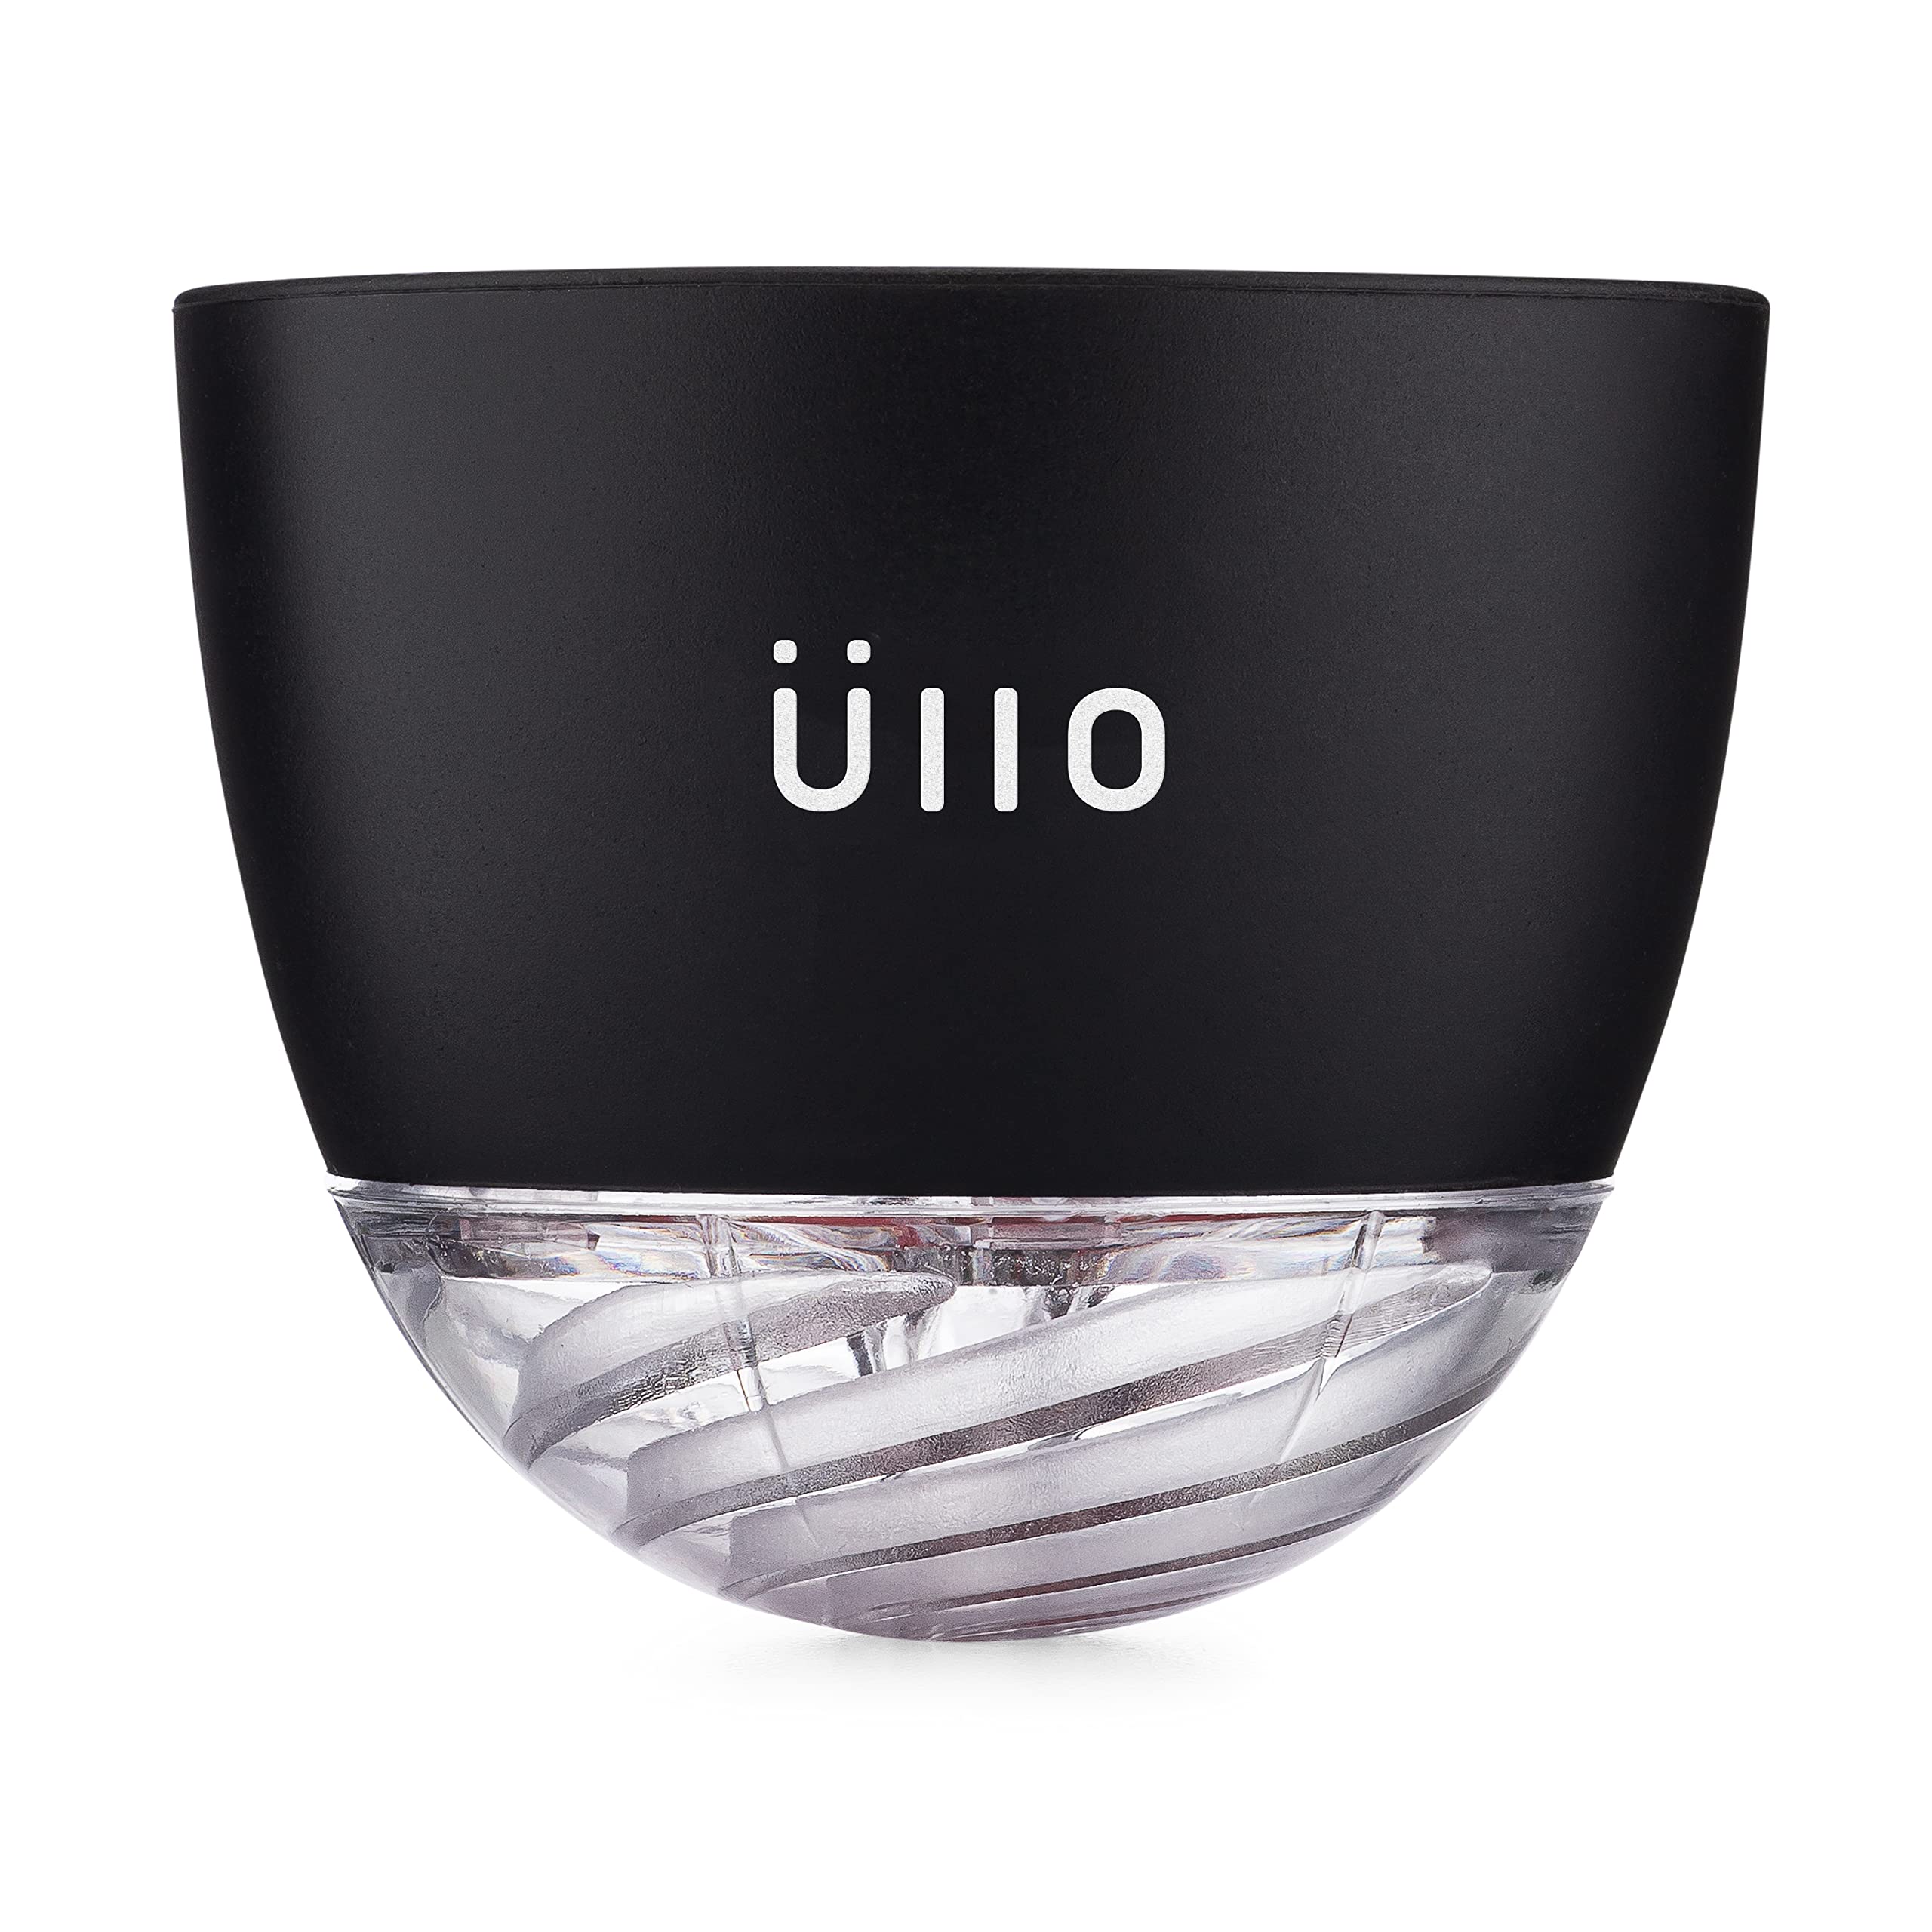  ULLO 4つの選択的亜硫酸フィルターを備えたワイン清浄器。亜硫酸塩とヒスタミンを除去し、味を回復し、空気を含ませ、精製されたワインの魔法を...